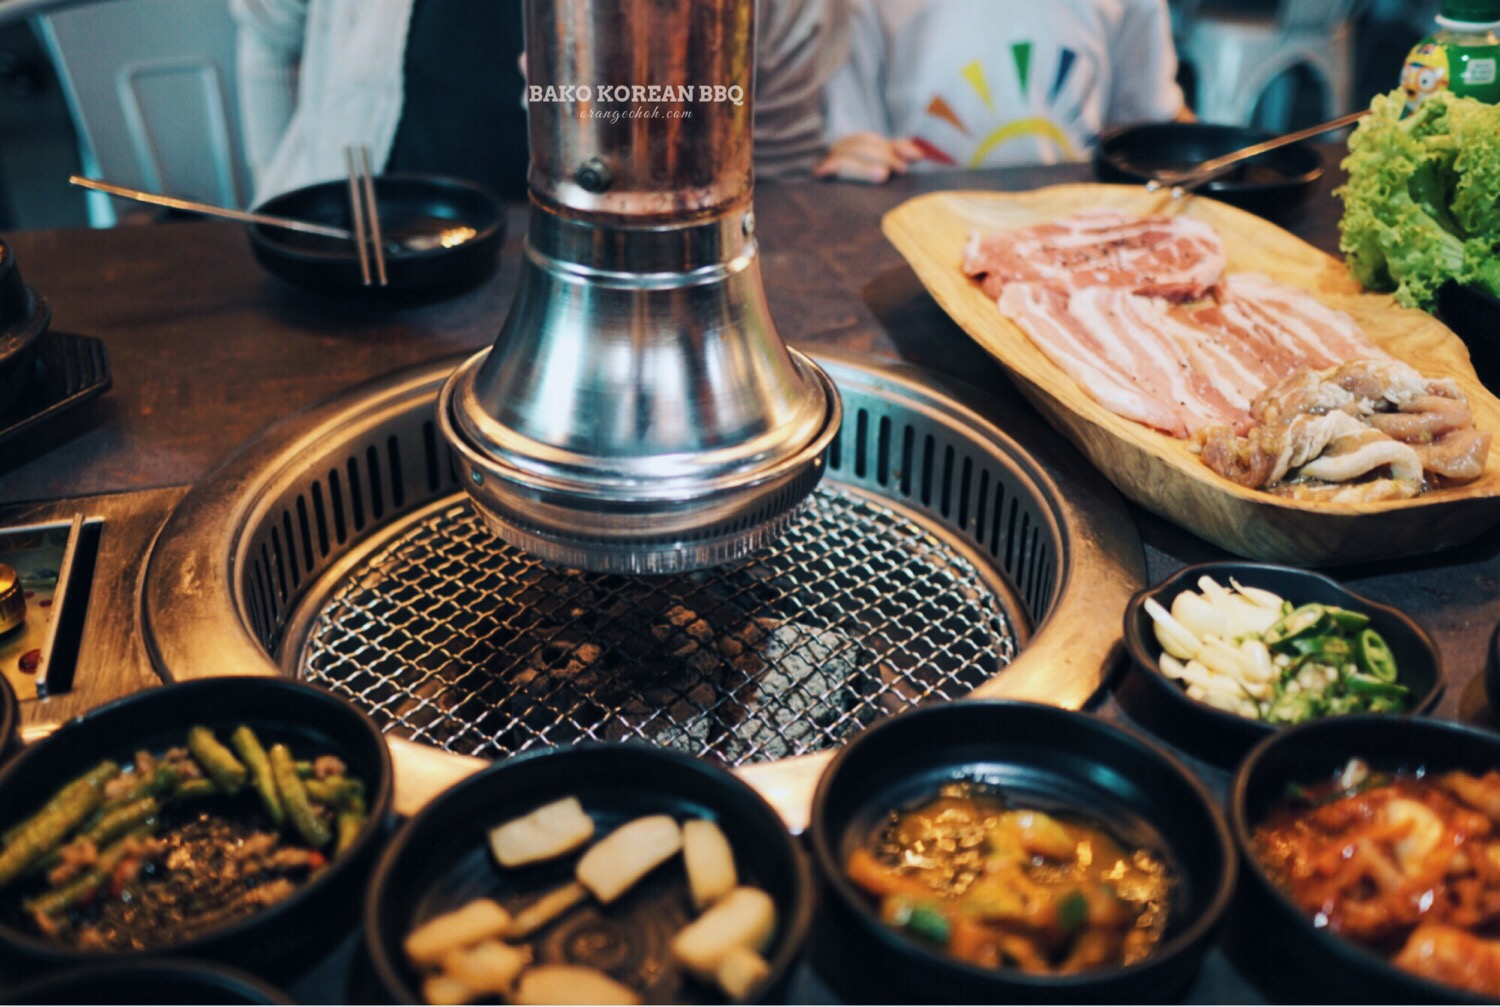 Bako Korean BBQ @ Sri Petaling - Malaysia Food & Travel